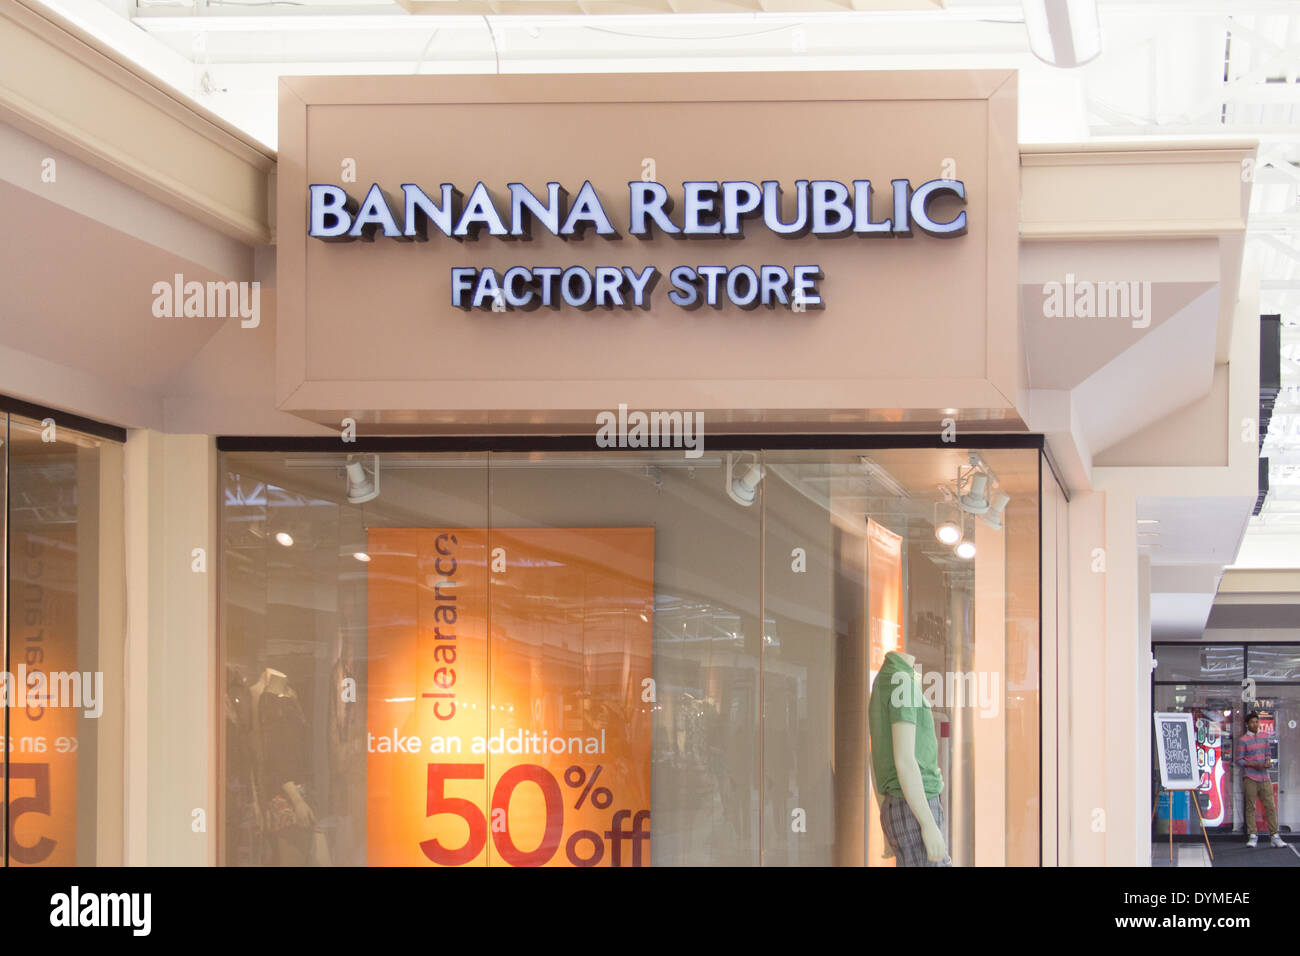 Banana Republic Factory Store Fotografía de stock - Alamy